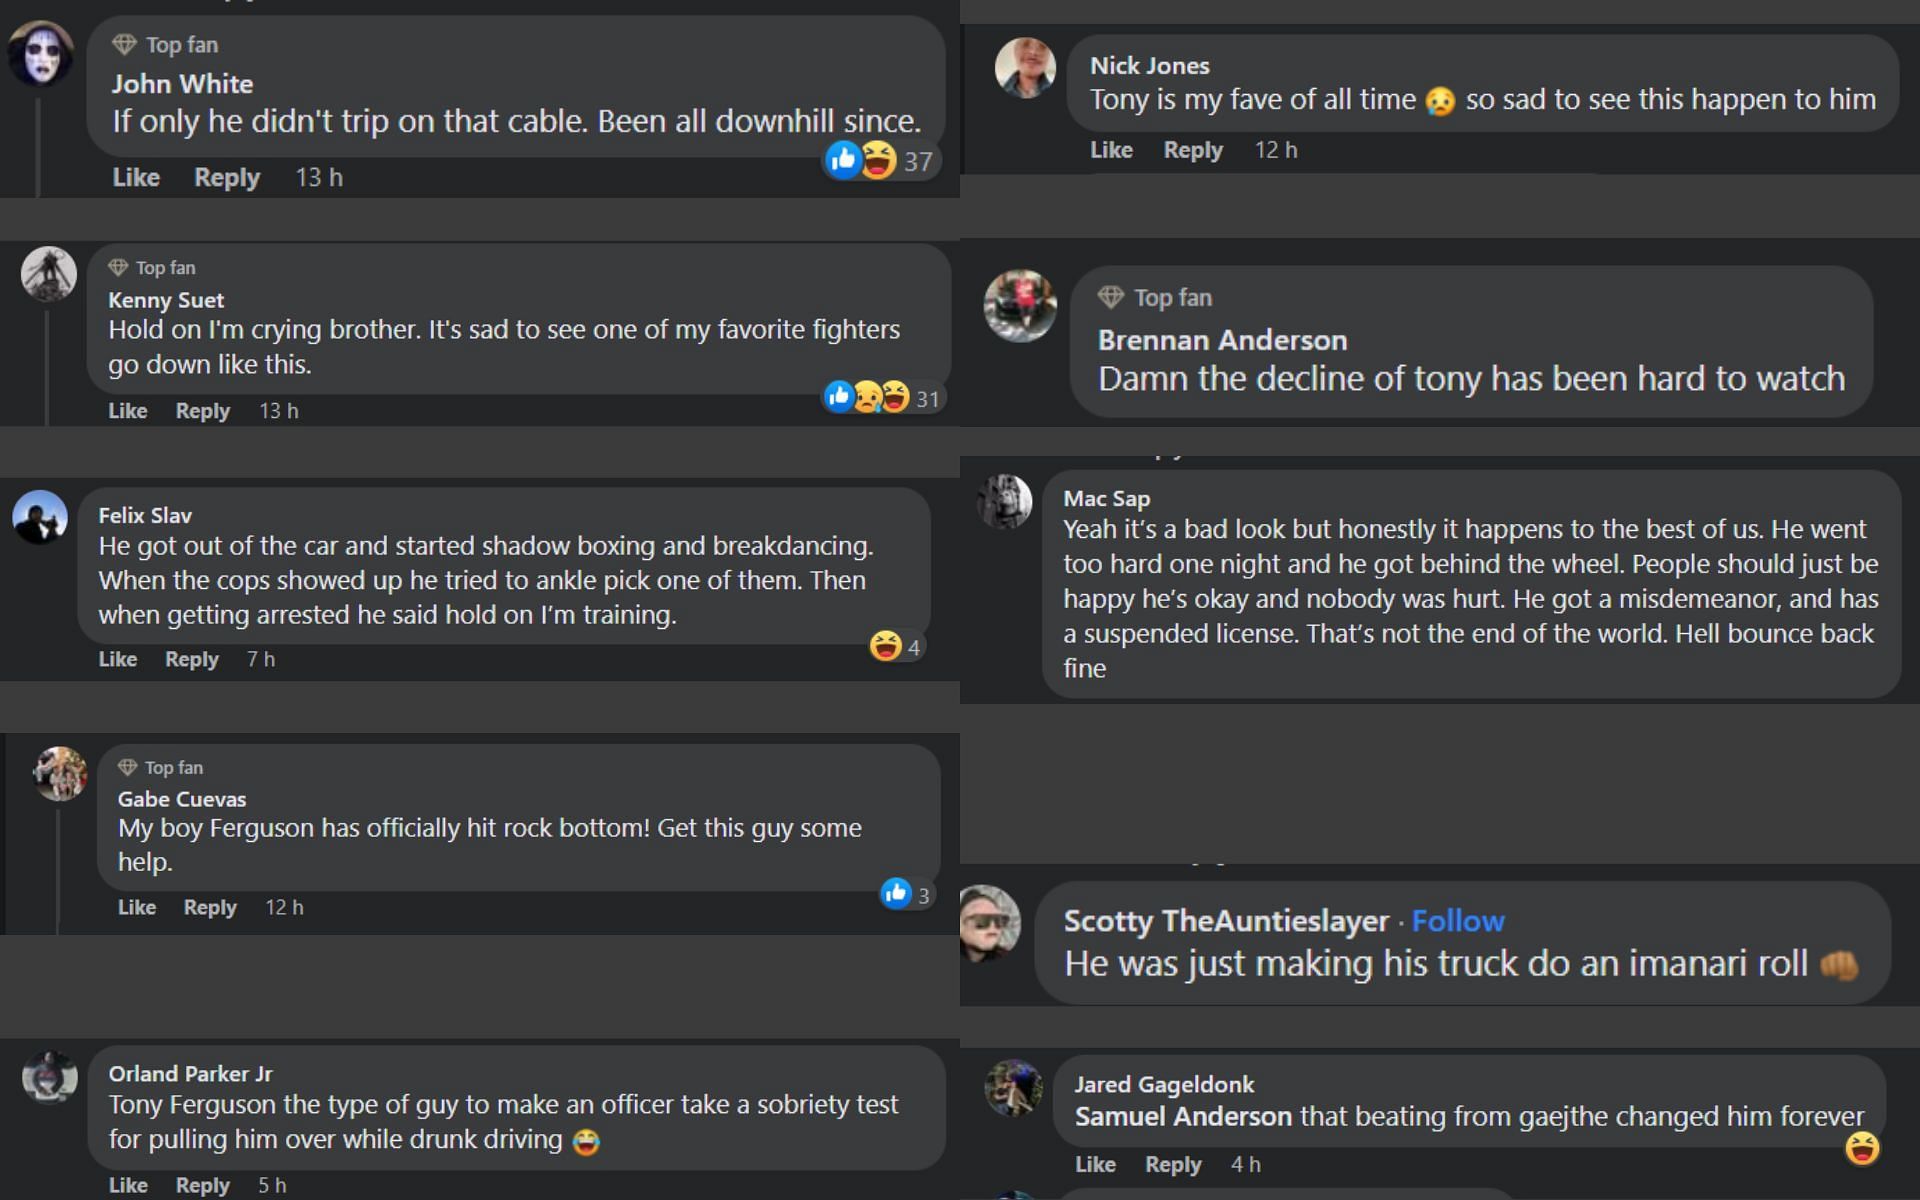 Fans show concern after Tony Ferguson car crash